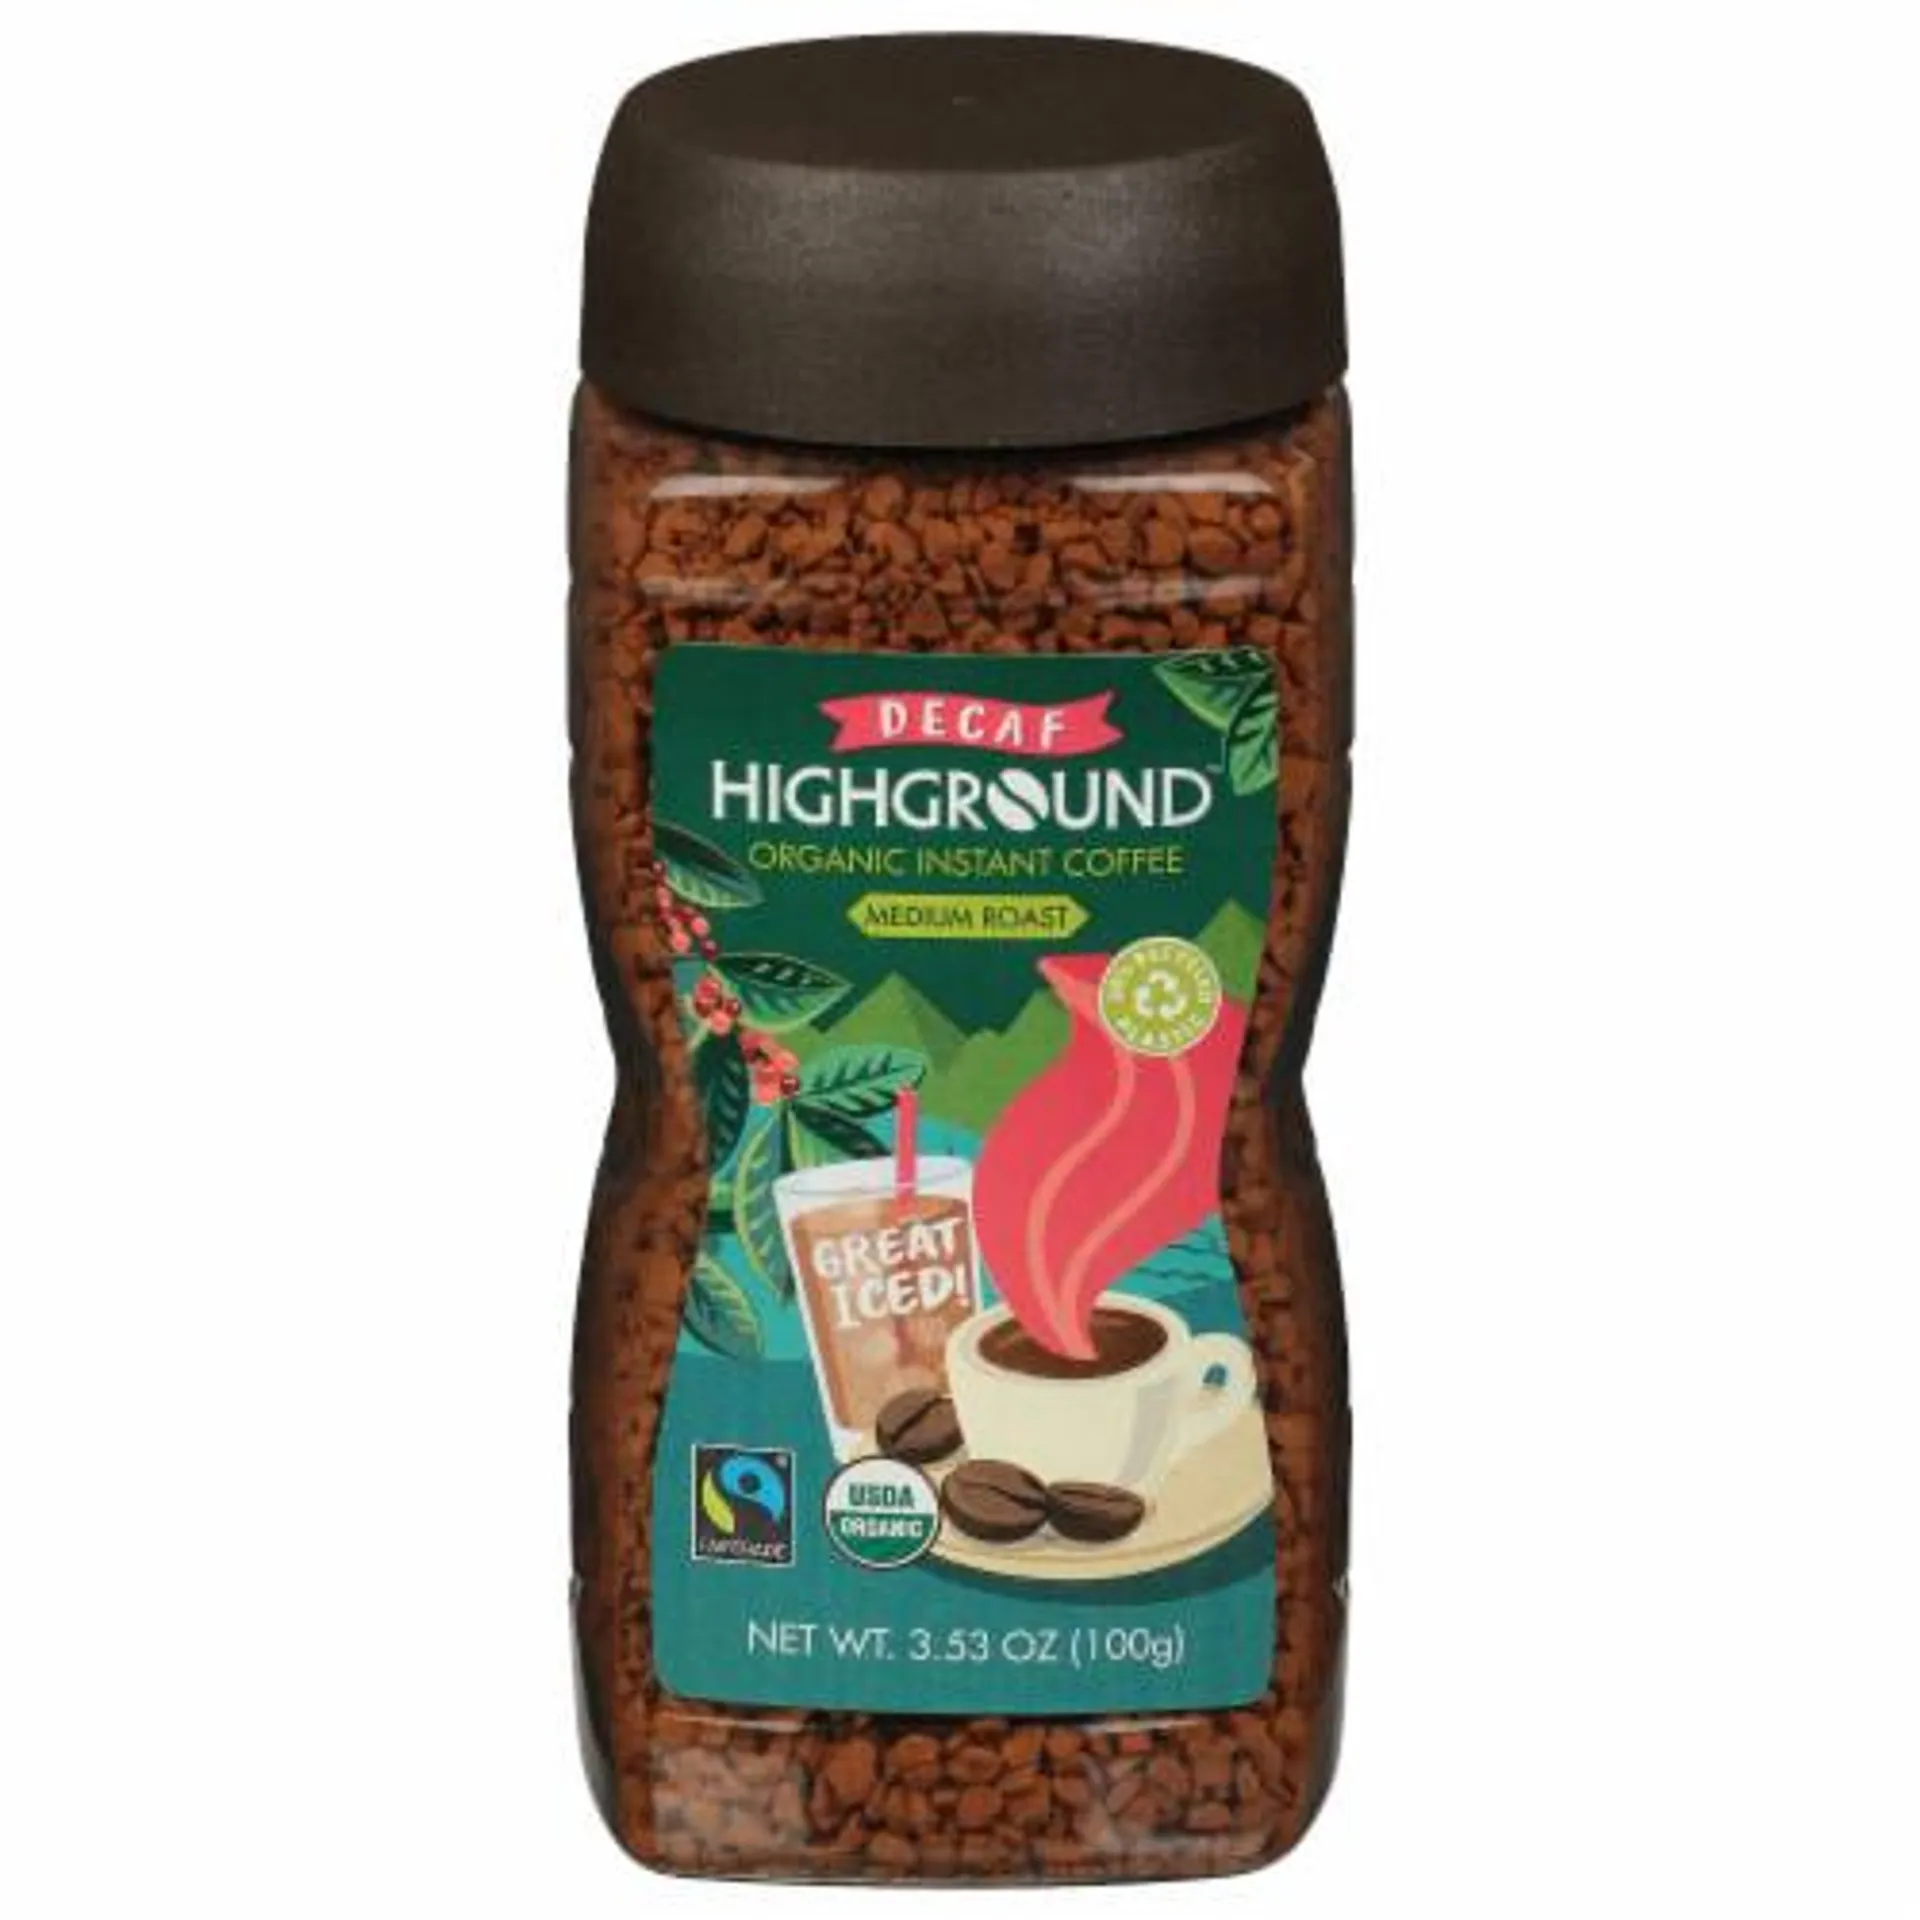 Highground Decaf Medium Roast Organic Instant Coffee